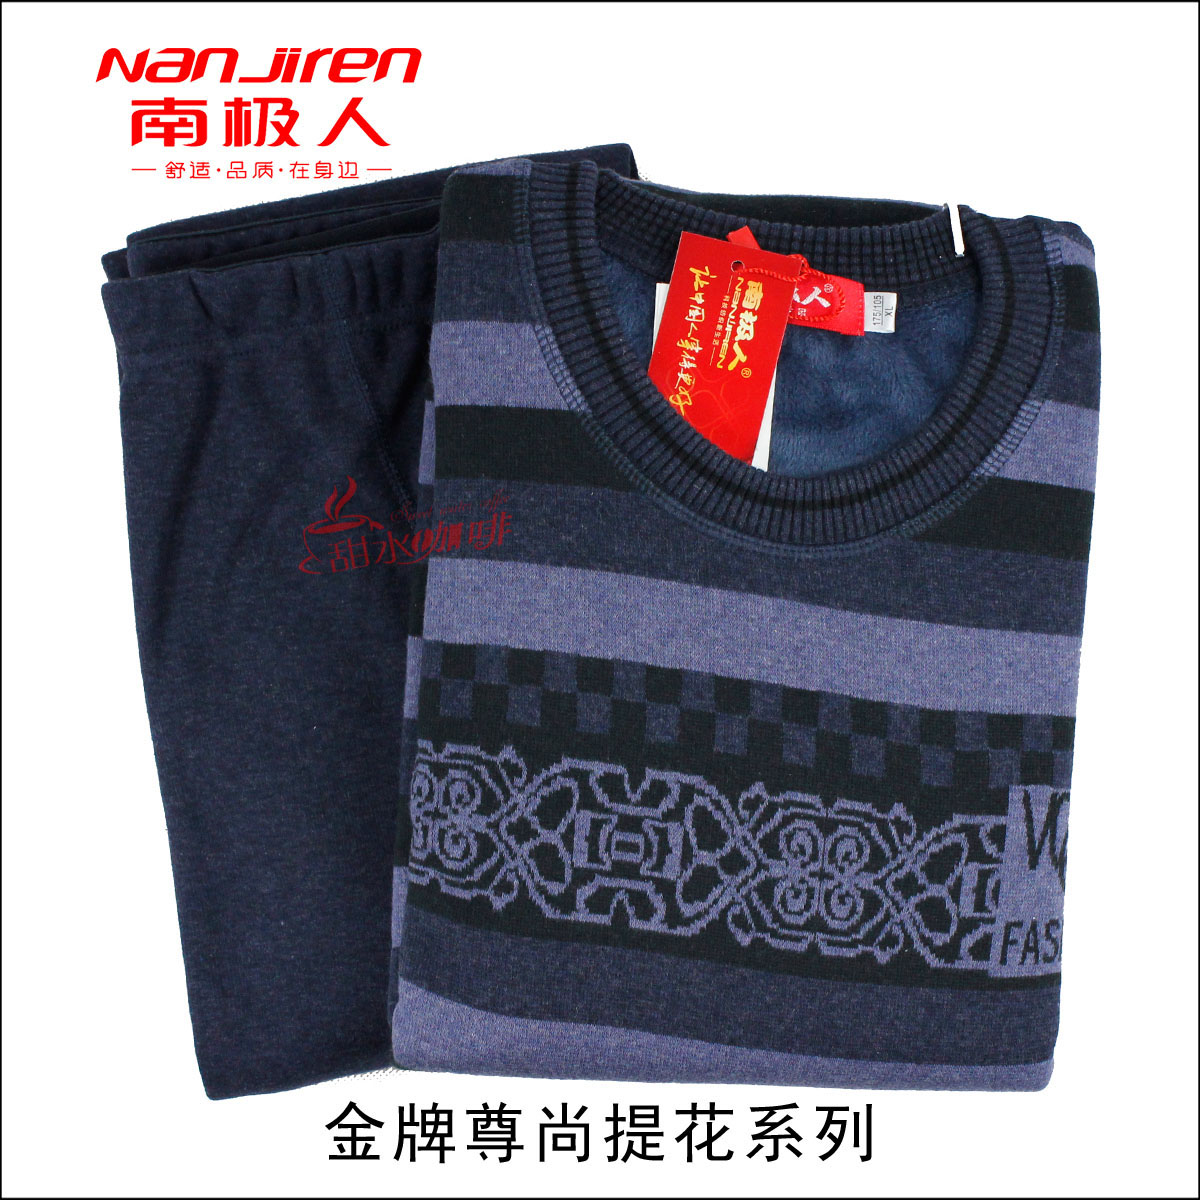 Thermal underwear quality fashion jacquard male thermal underwear set 9070 - 8